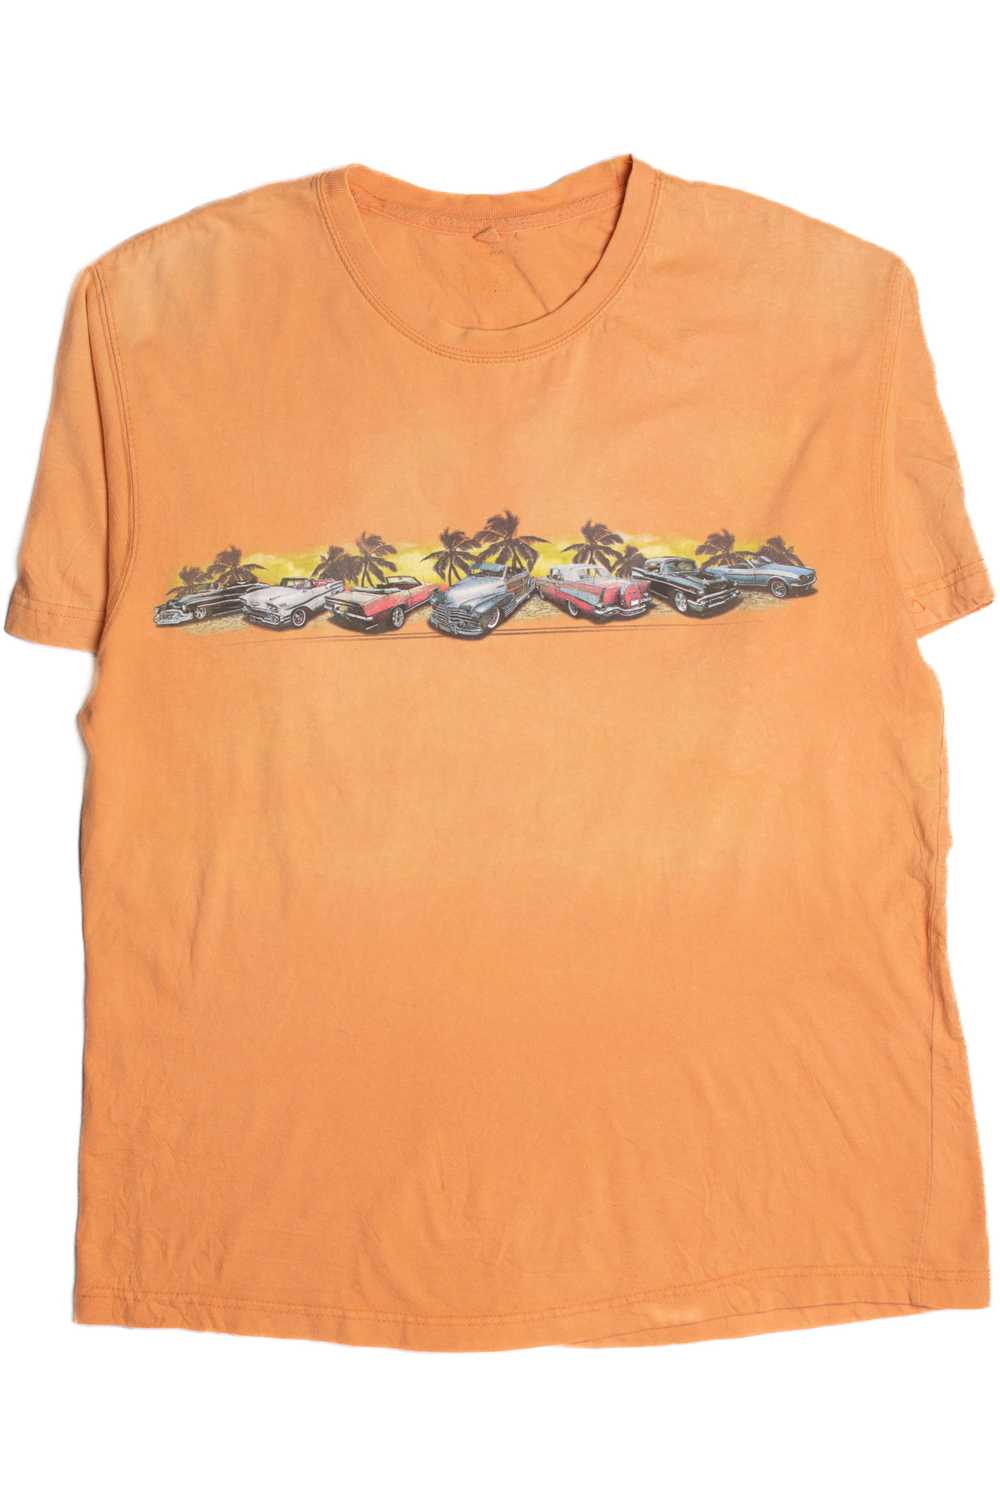 Classic Cars T-Shirt 8575 - image 1